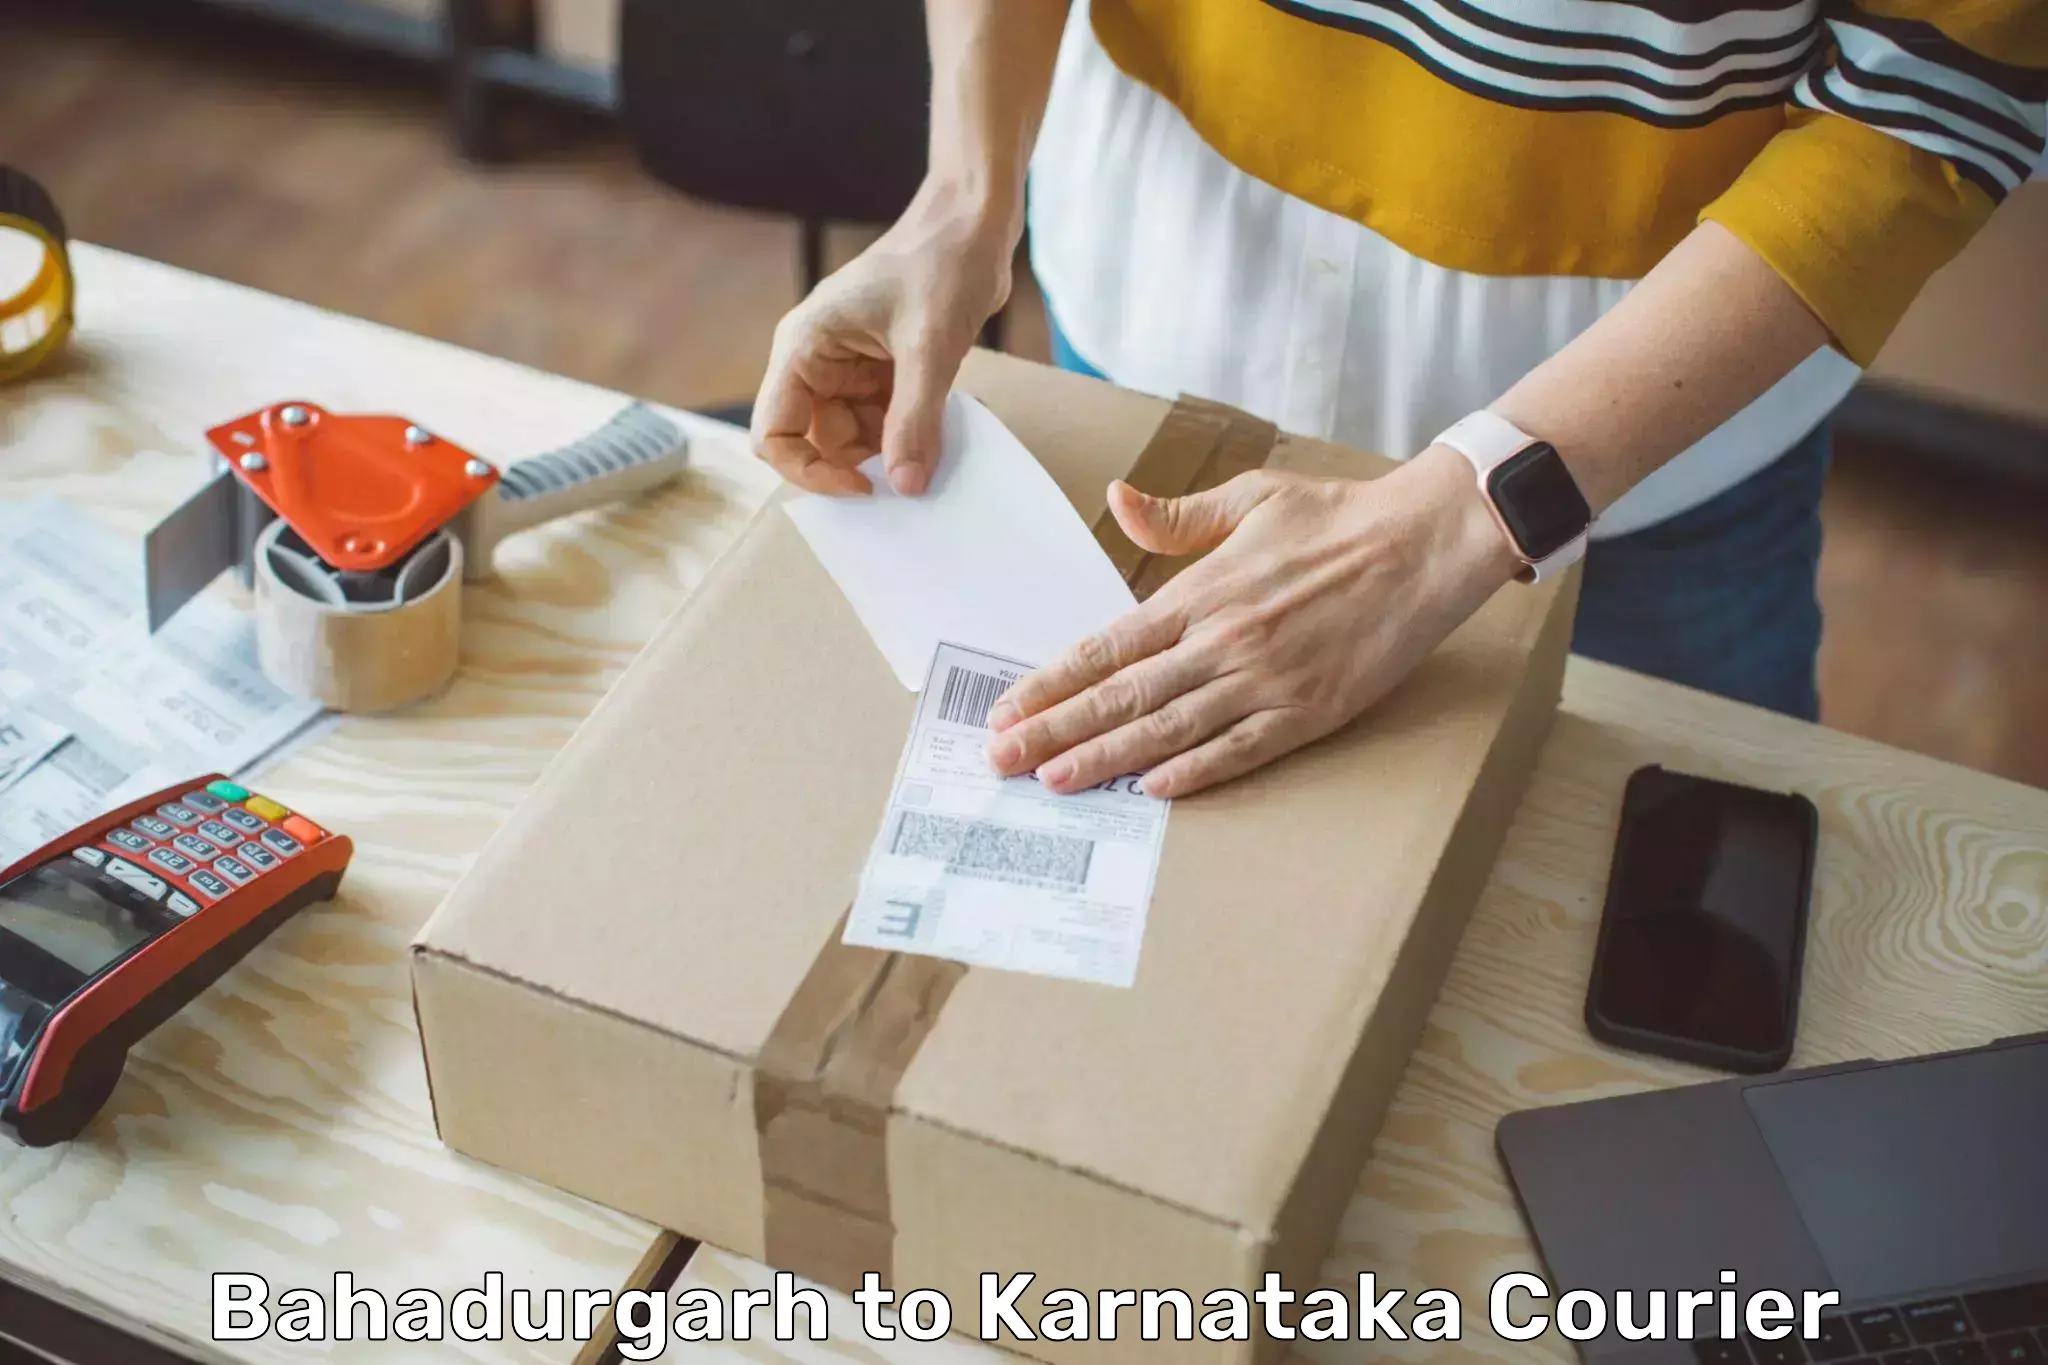 Efficient order fulfillment in Bahadurgarh to Karnataka